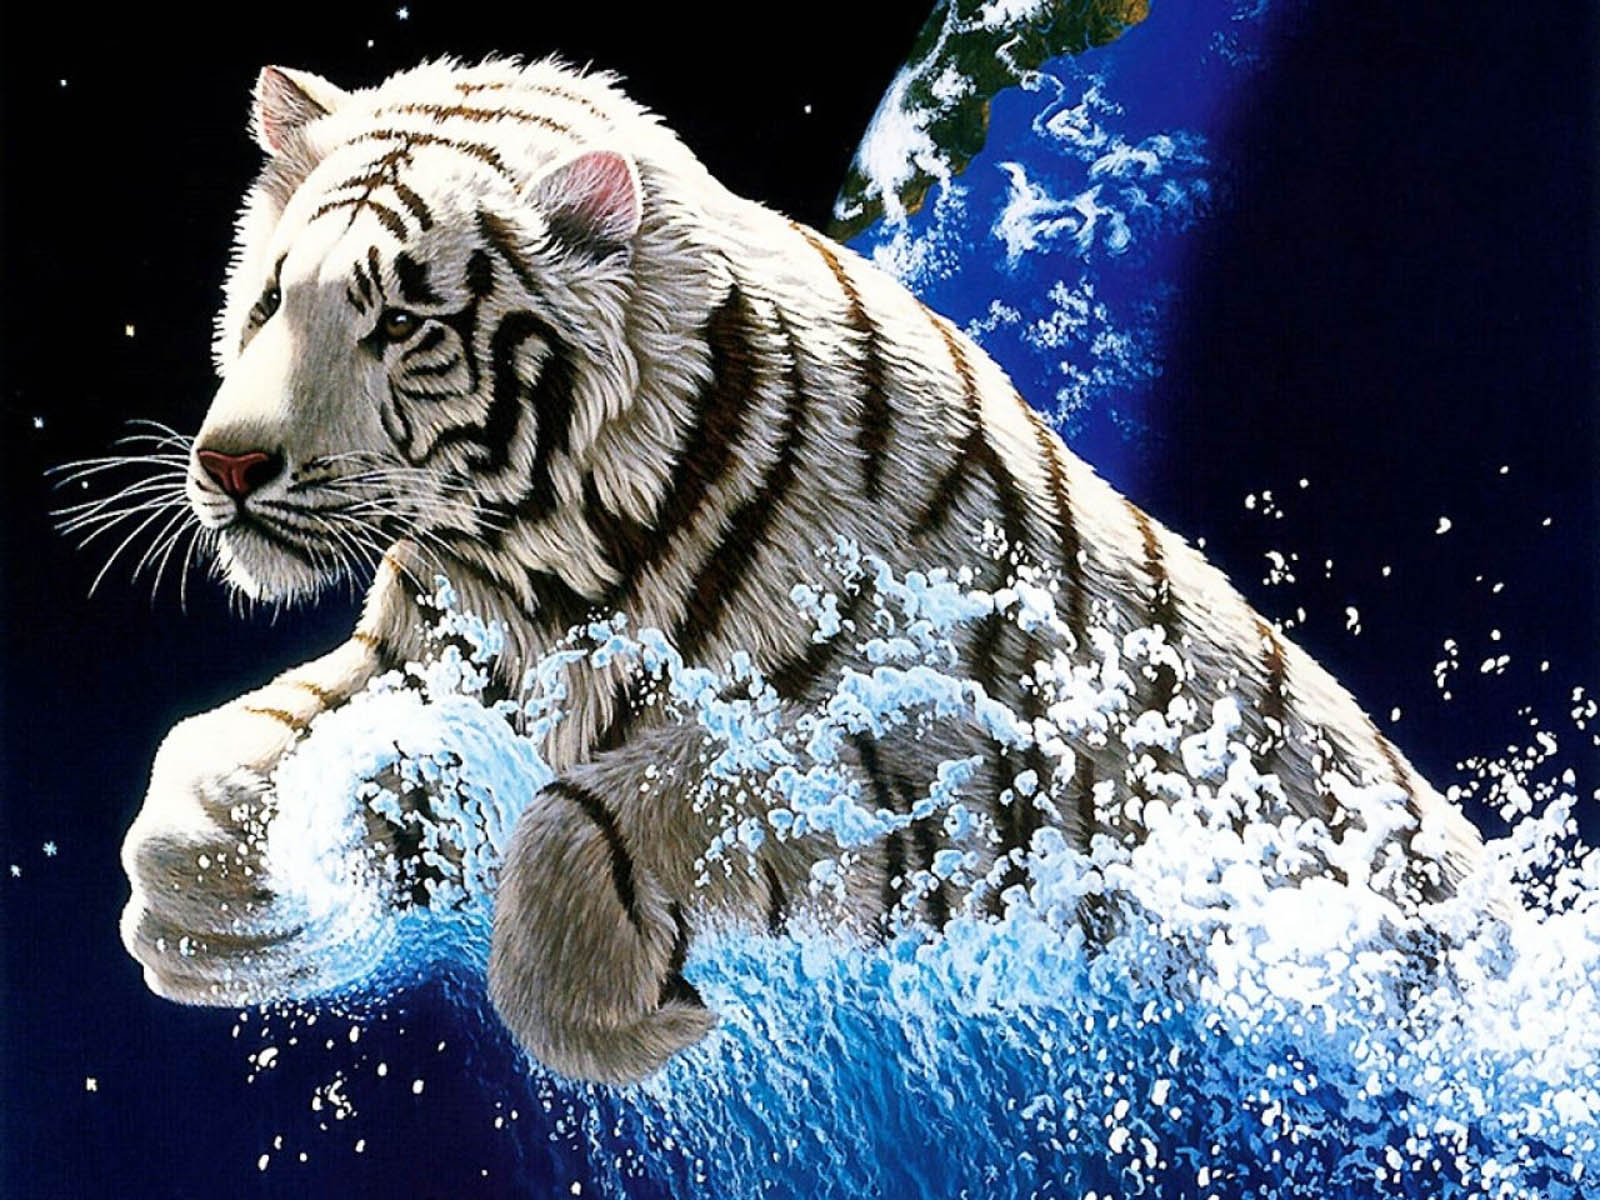 Wallpaper Tiger 3d Desktop Background Image Photos And Pictures